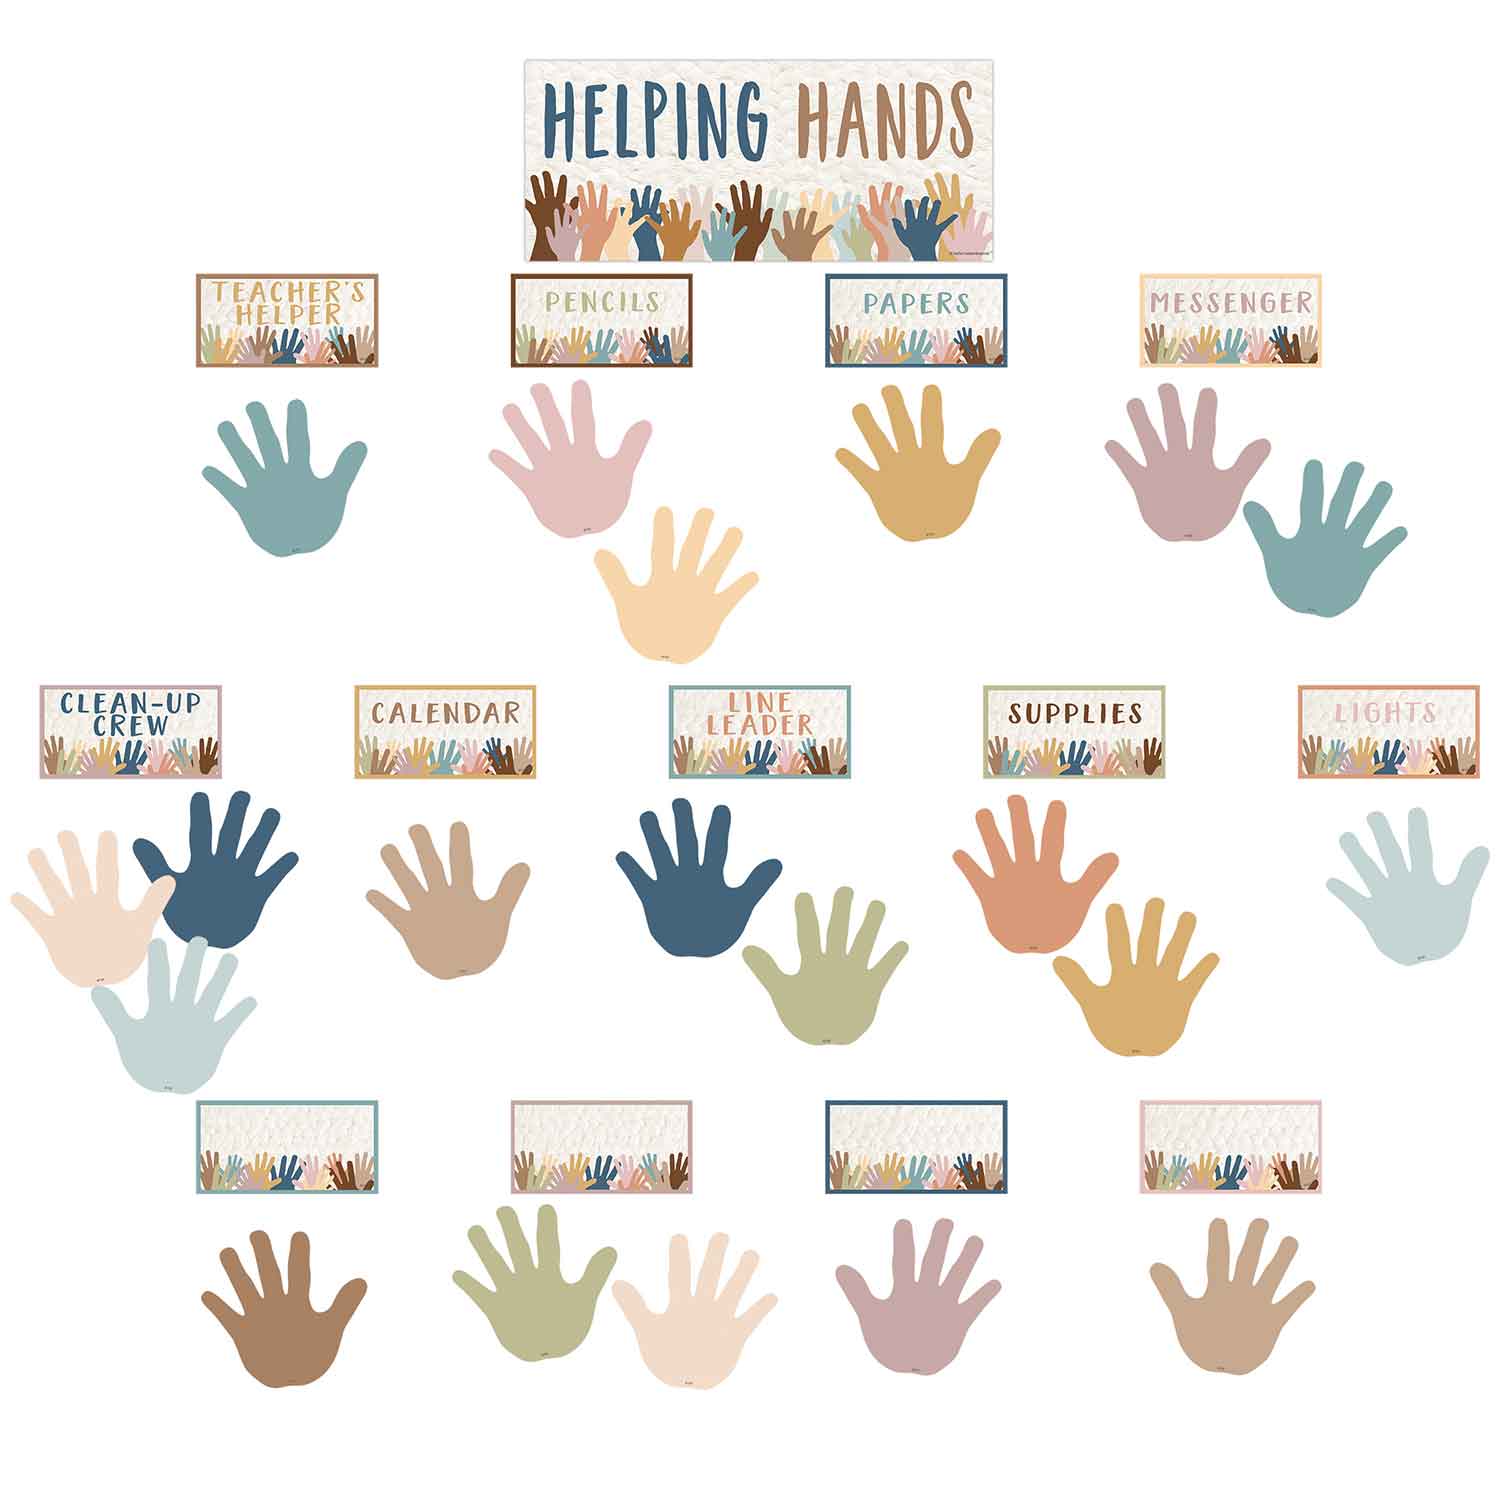 Everyone is Welcome Helping Hands Mini Bulletin Board Set